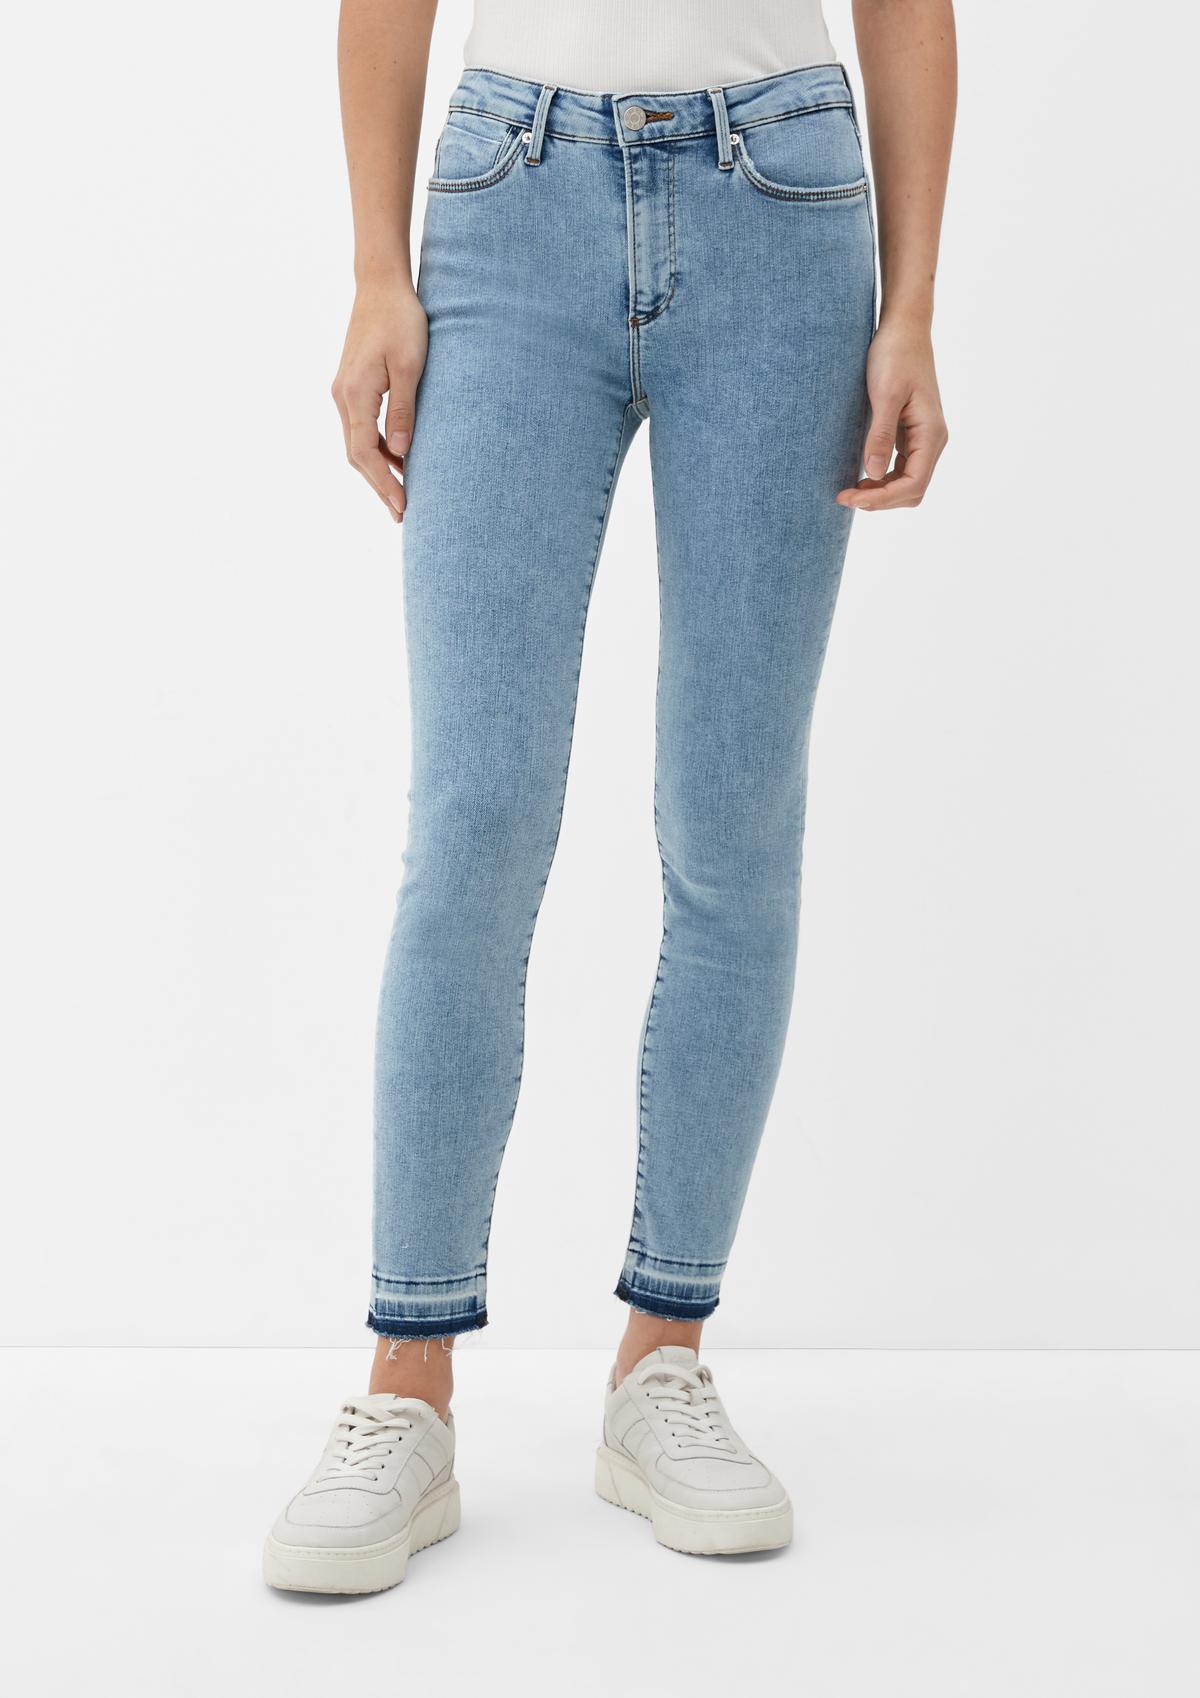 Izabell jeans / skinny fit - leg rise / mid skinny / stone